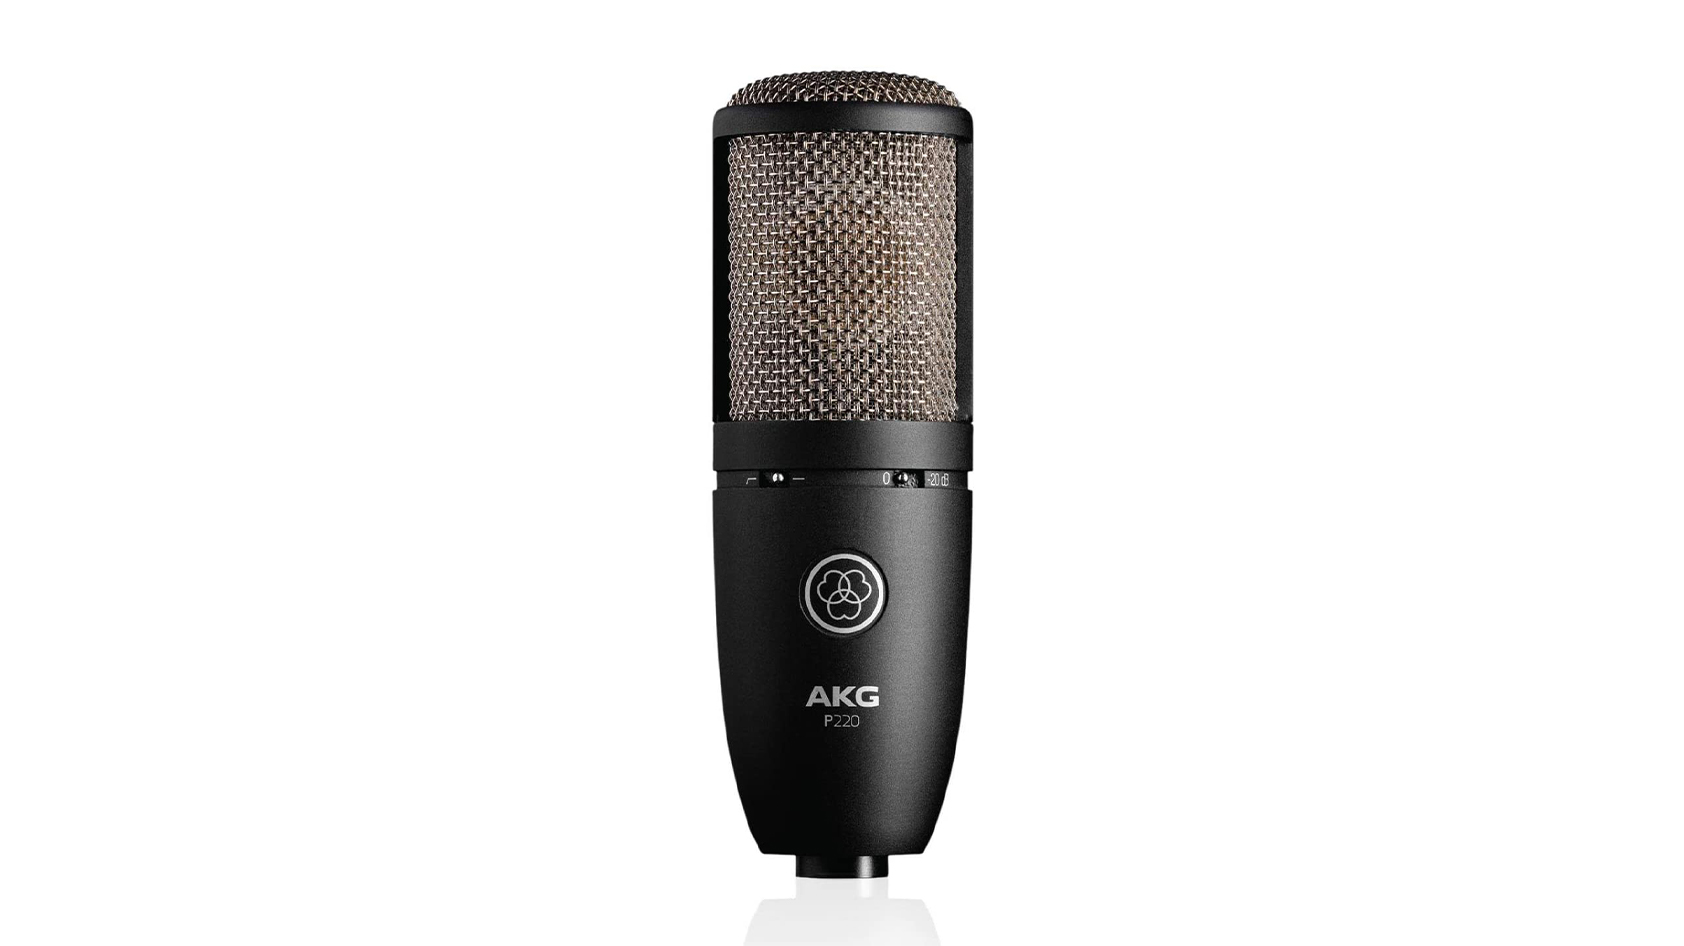 https://www.soundguys.com/wp-content/uploads/2020/06/AKG-P420-XLR-microphone-black-product.jpg